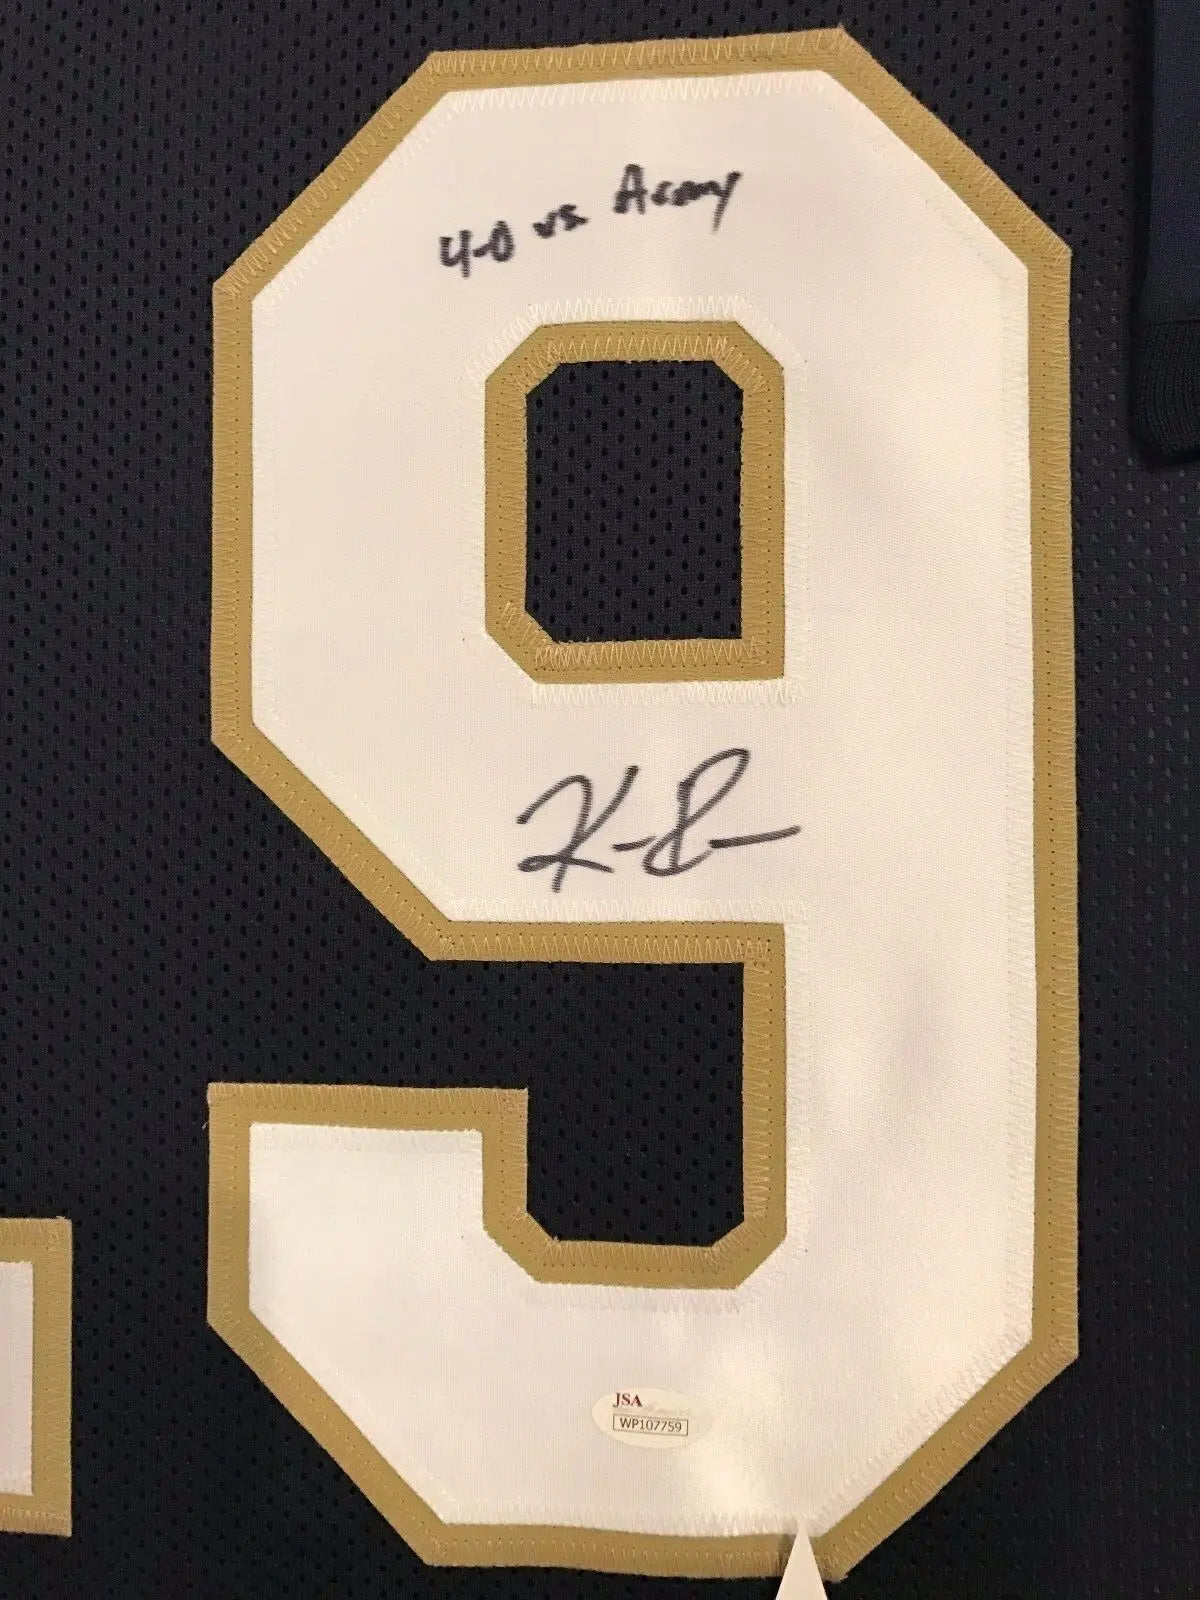 MVP Authentics Framed Keenan Reynolds Autographed Signed Inscr. Navy Midshipmen Jersey Jsa Coa 360 sports jersey framing , jersey framing